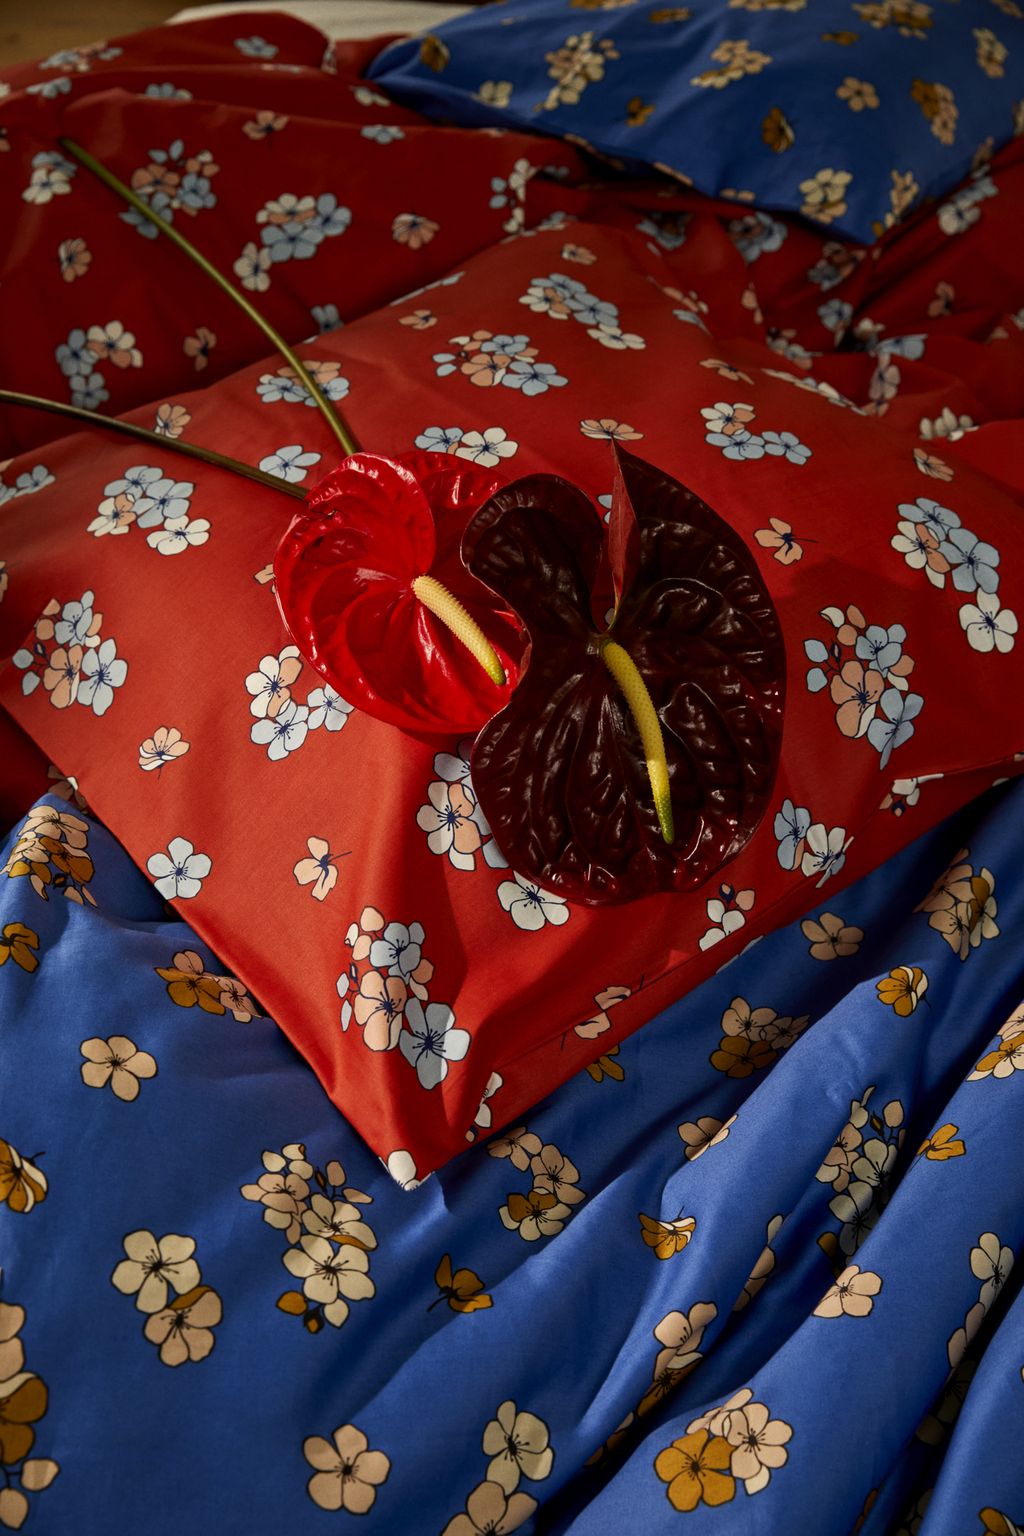 JUNA Stora behagligt sängkläder 140x220 cm, chili